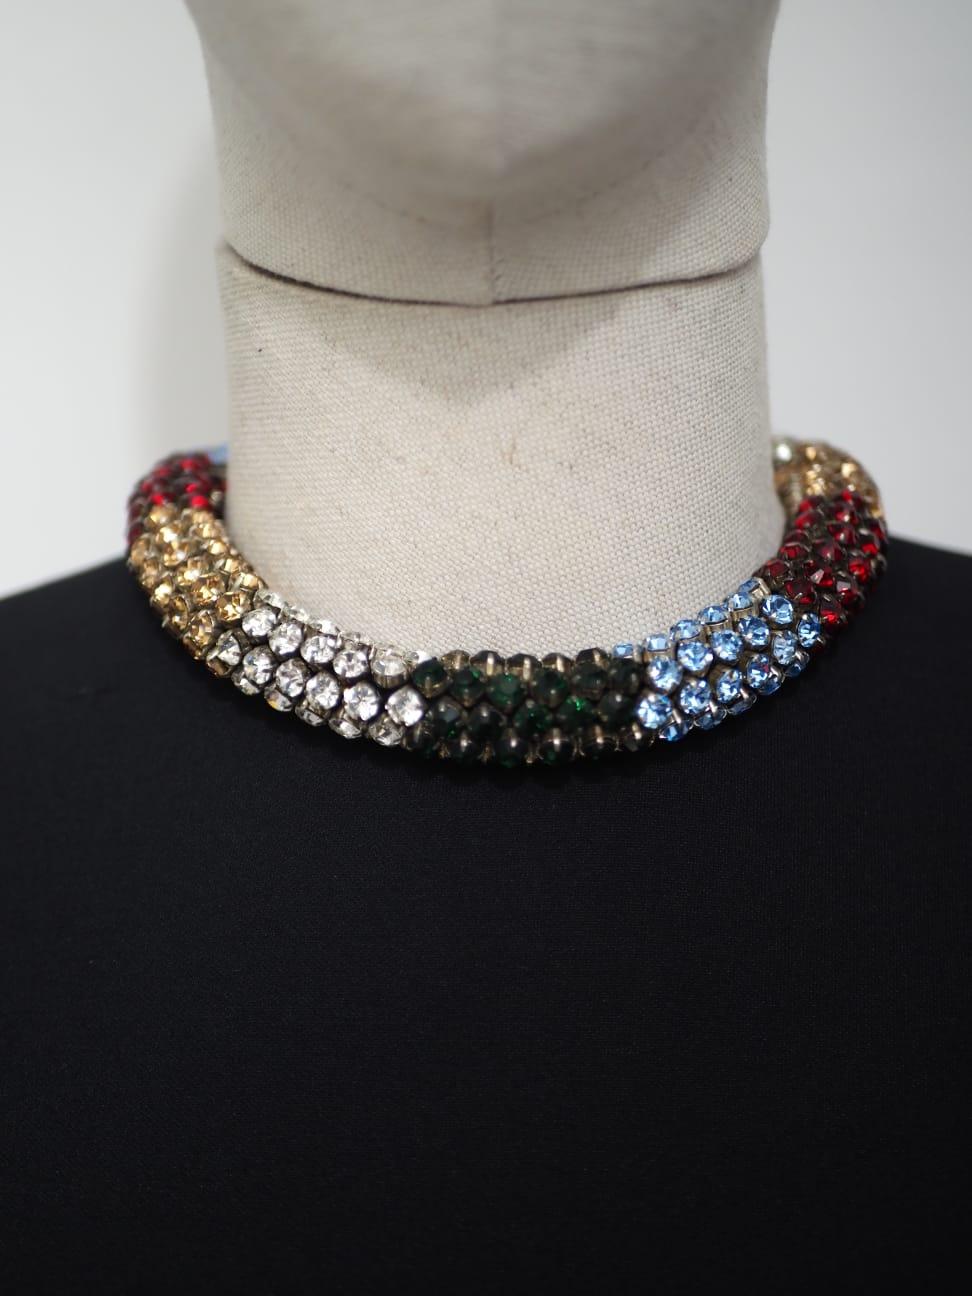 Alexander McQueen black with multicolour swarovski stones necklace dress
size S 